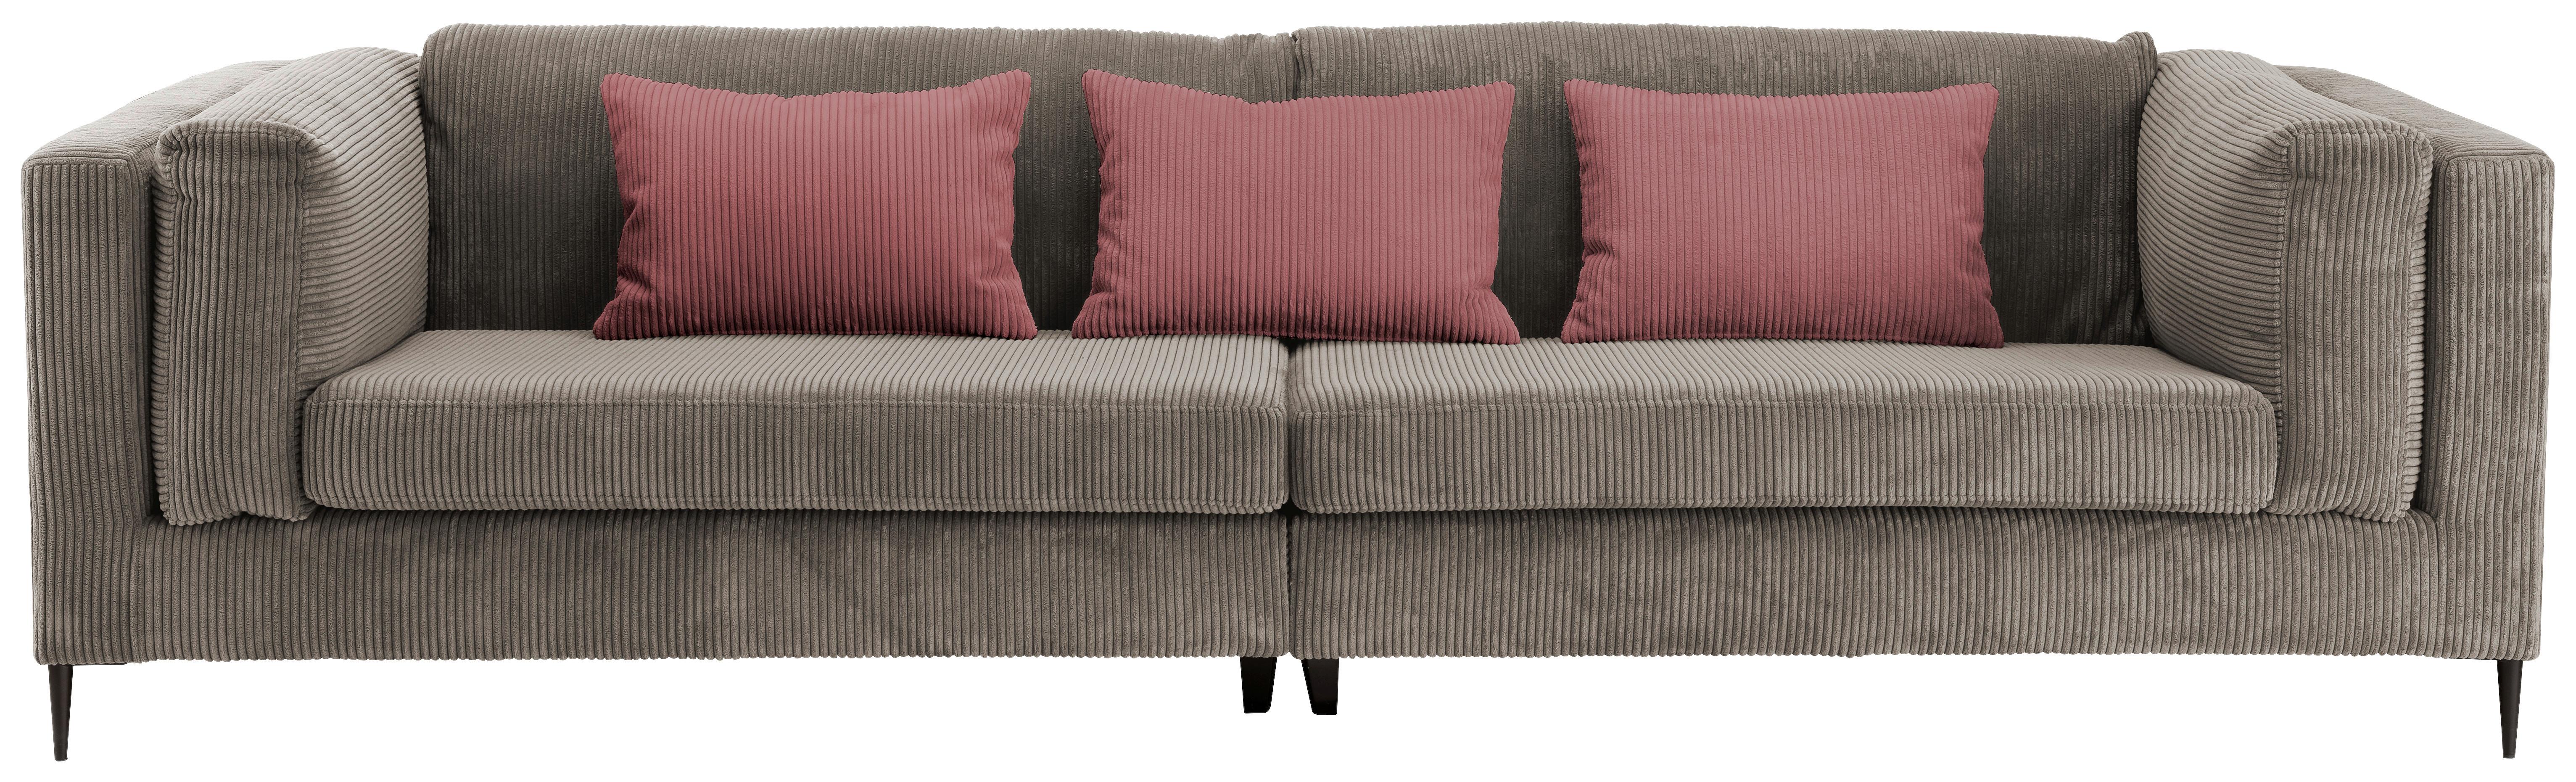 4-Sitzer-Sofa Roma Braun/Grau Kord - Koralle/Schwarz, Design, Textil (306/83/113cm) - Livetastic